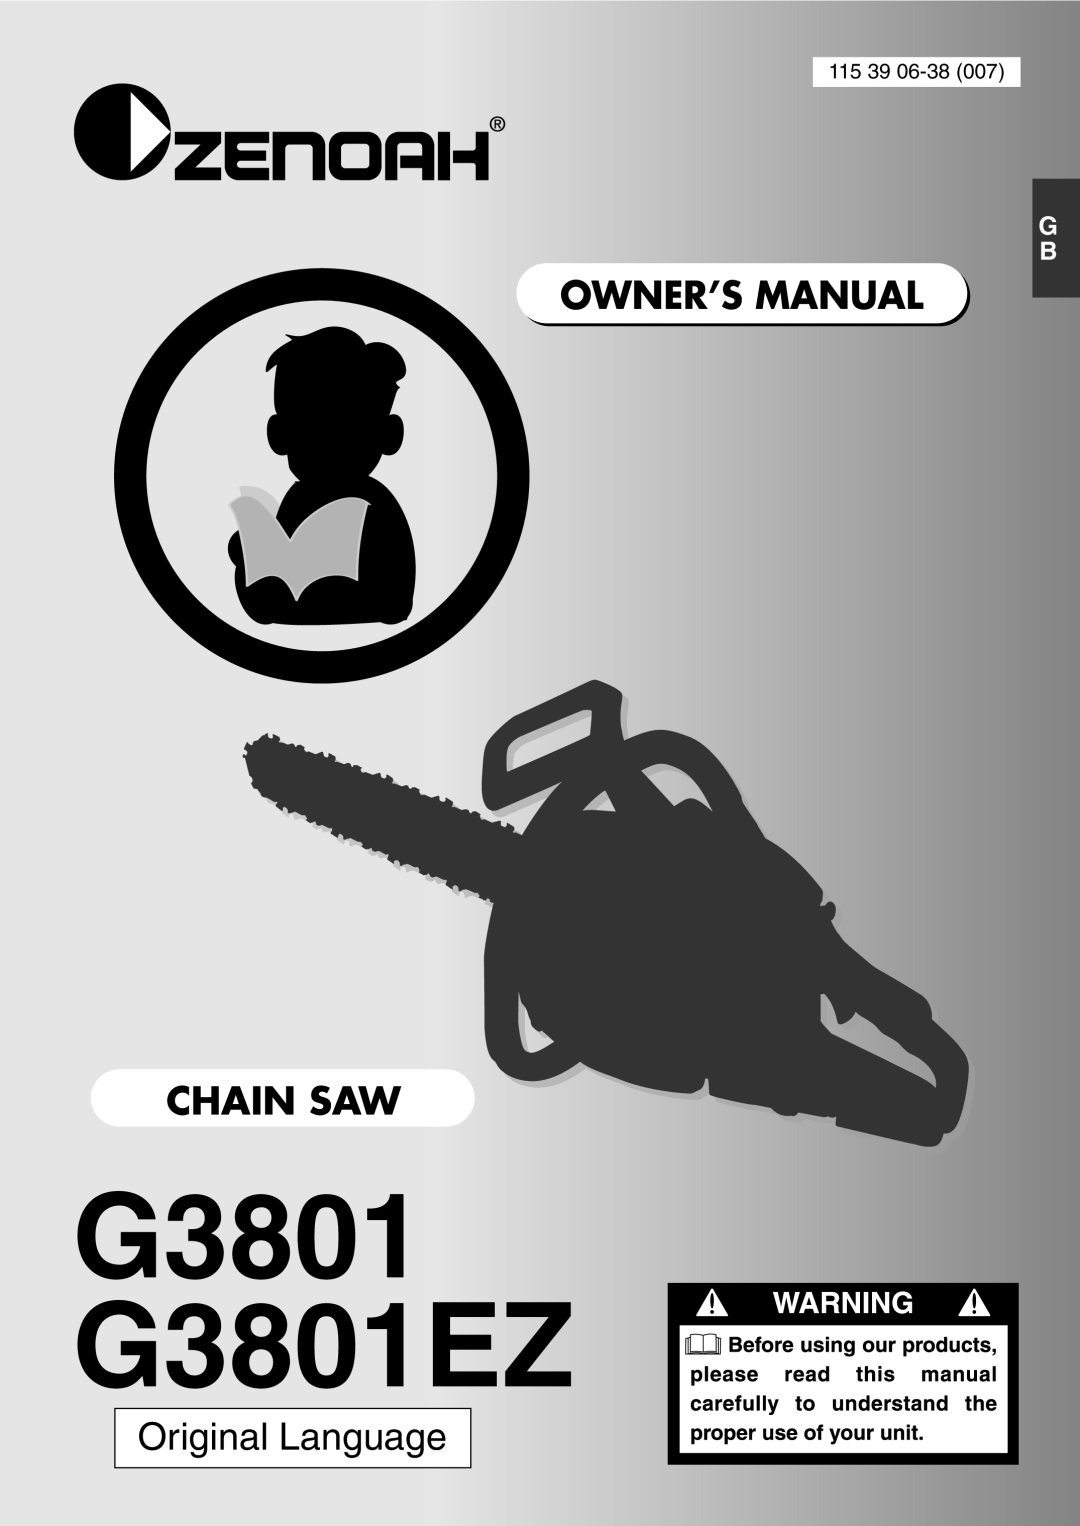 Zenoah owner manual G3801 G3801EZ, Chain Saw, Original Language, 115 